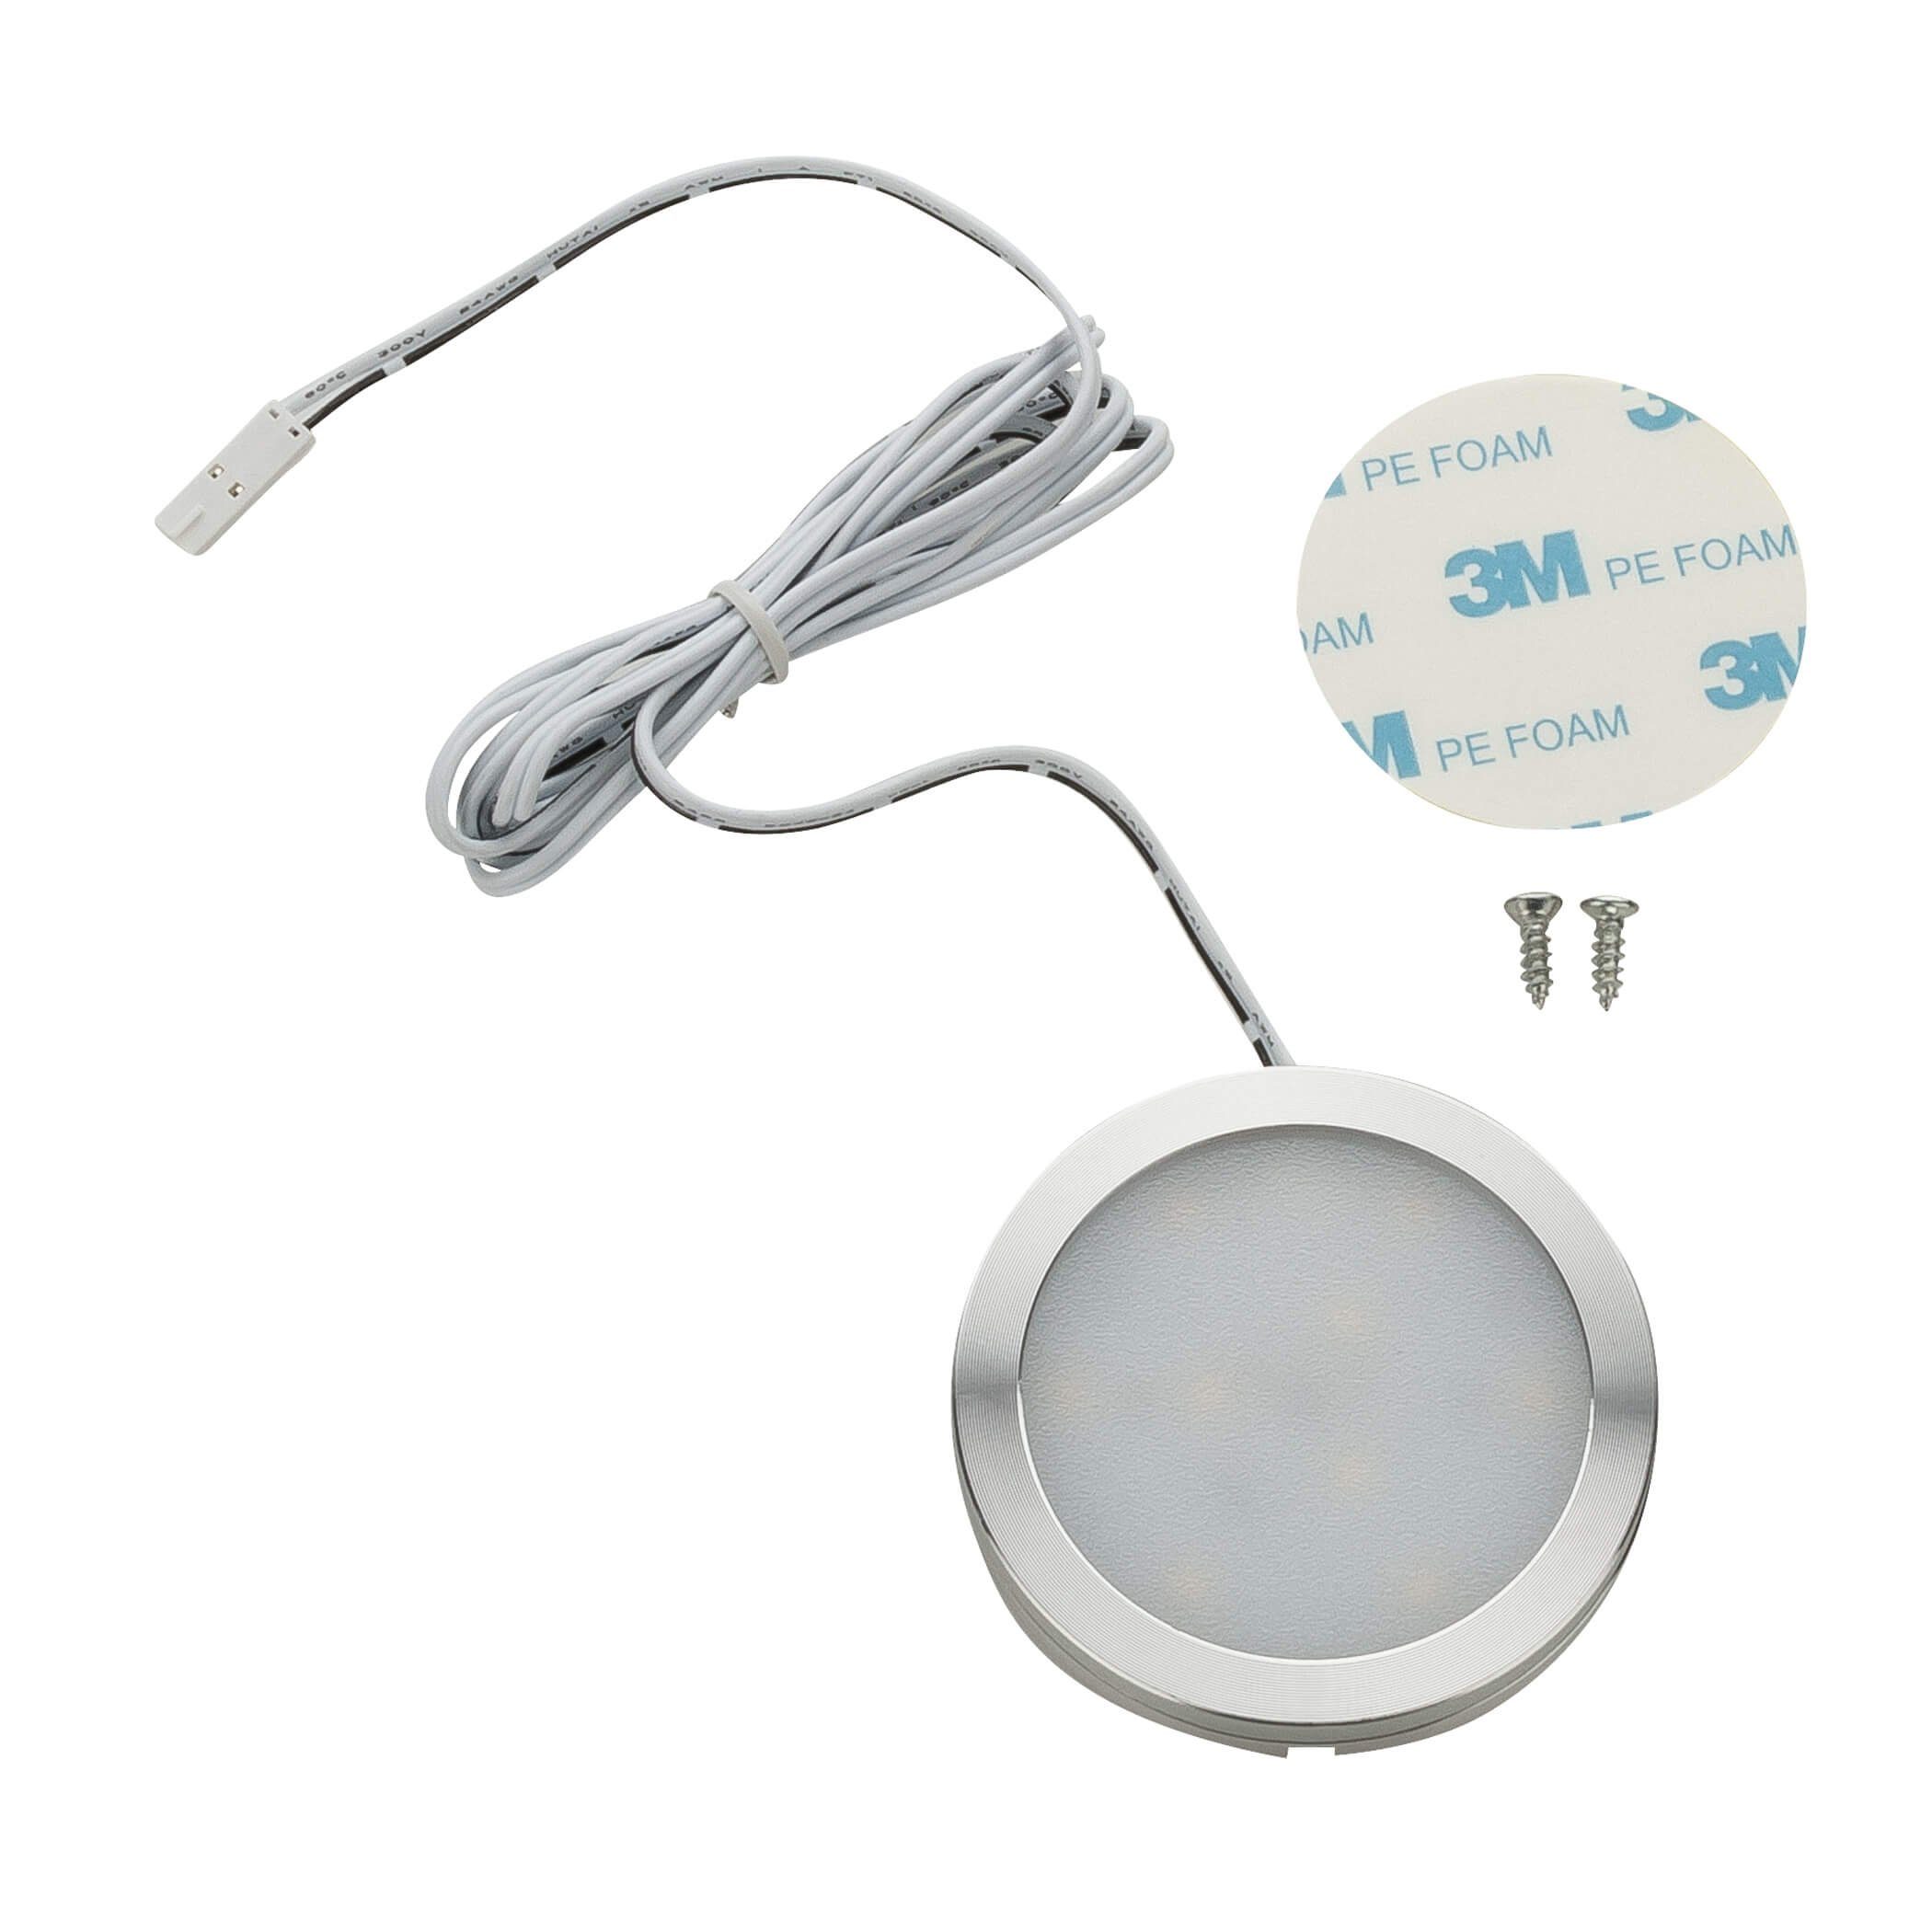 SEBSON Sensor, 8x warmweiß IR Schrankleuchte LED Set, 6er Aufbauleuchte 2W, 130lm dimmbar,